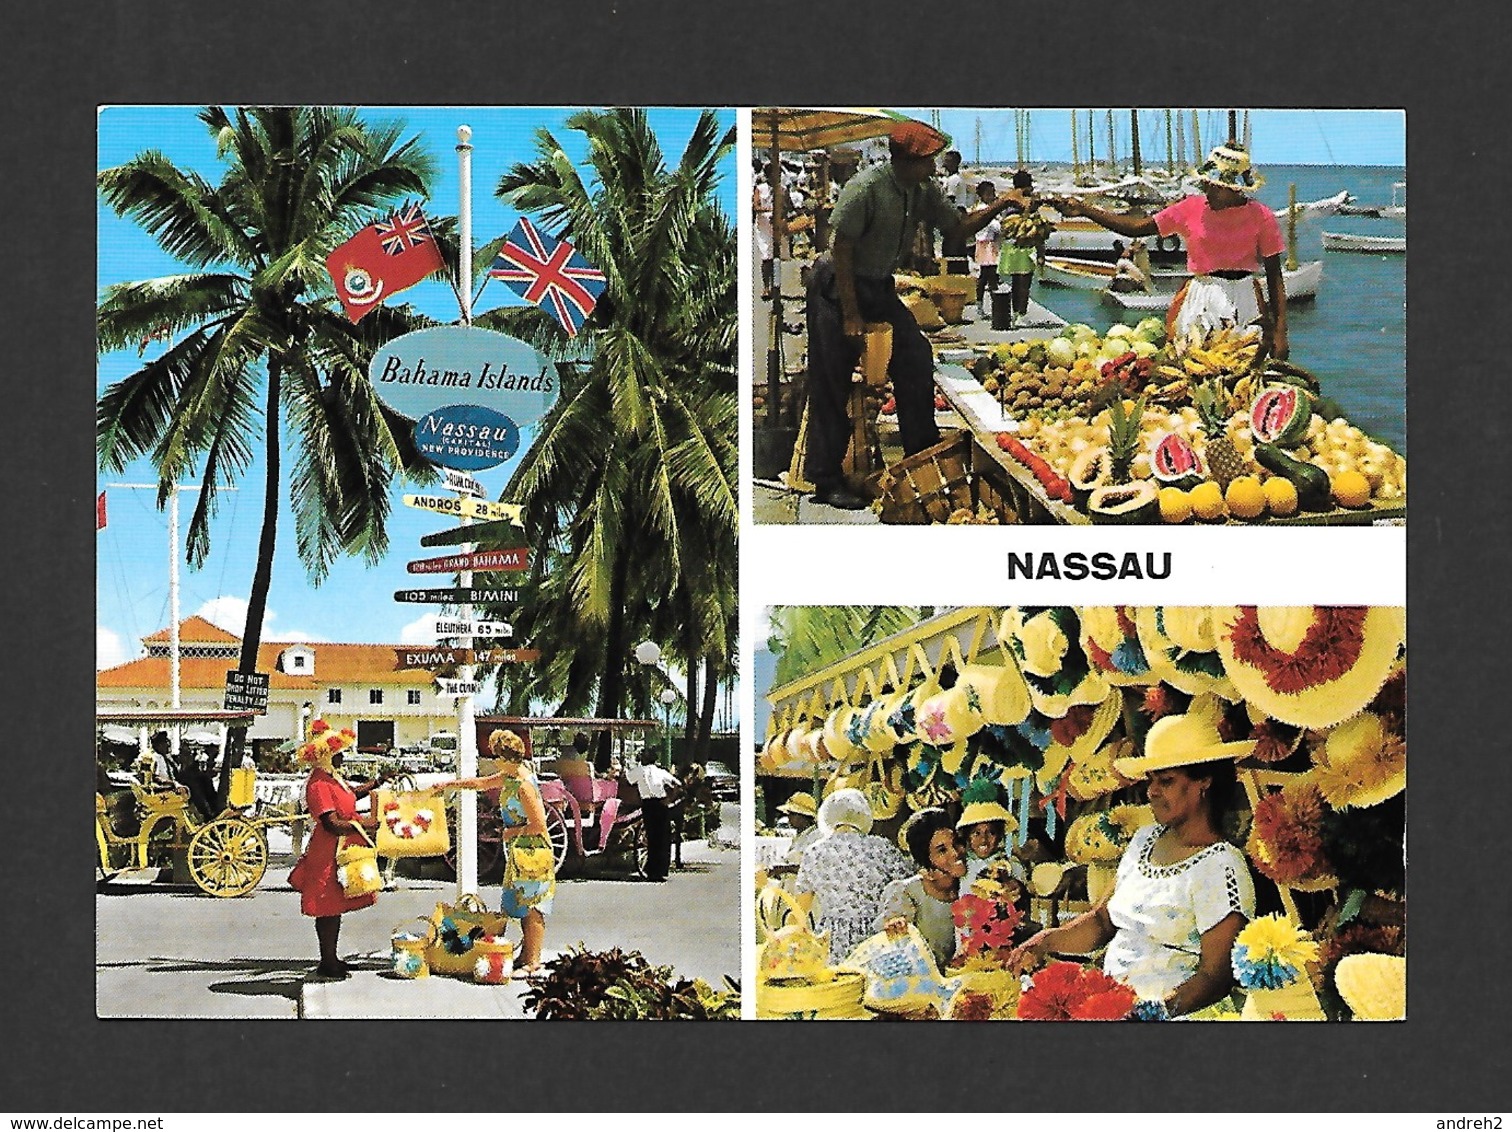 NASSAU - BAHAMAS - MARKET  LE MARCHÉ BAHAMA ISLANDS - MULTIVIEWS - PHOTO E. LUDWIG  BY JOHN HINDE STUDIO - Bahamas